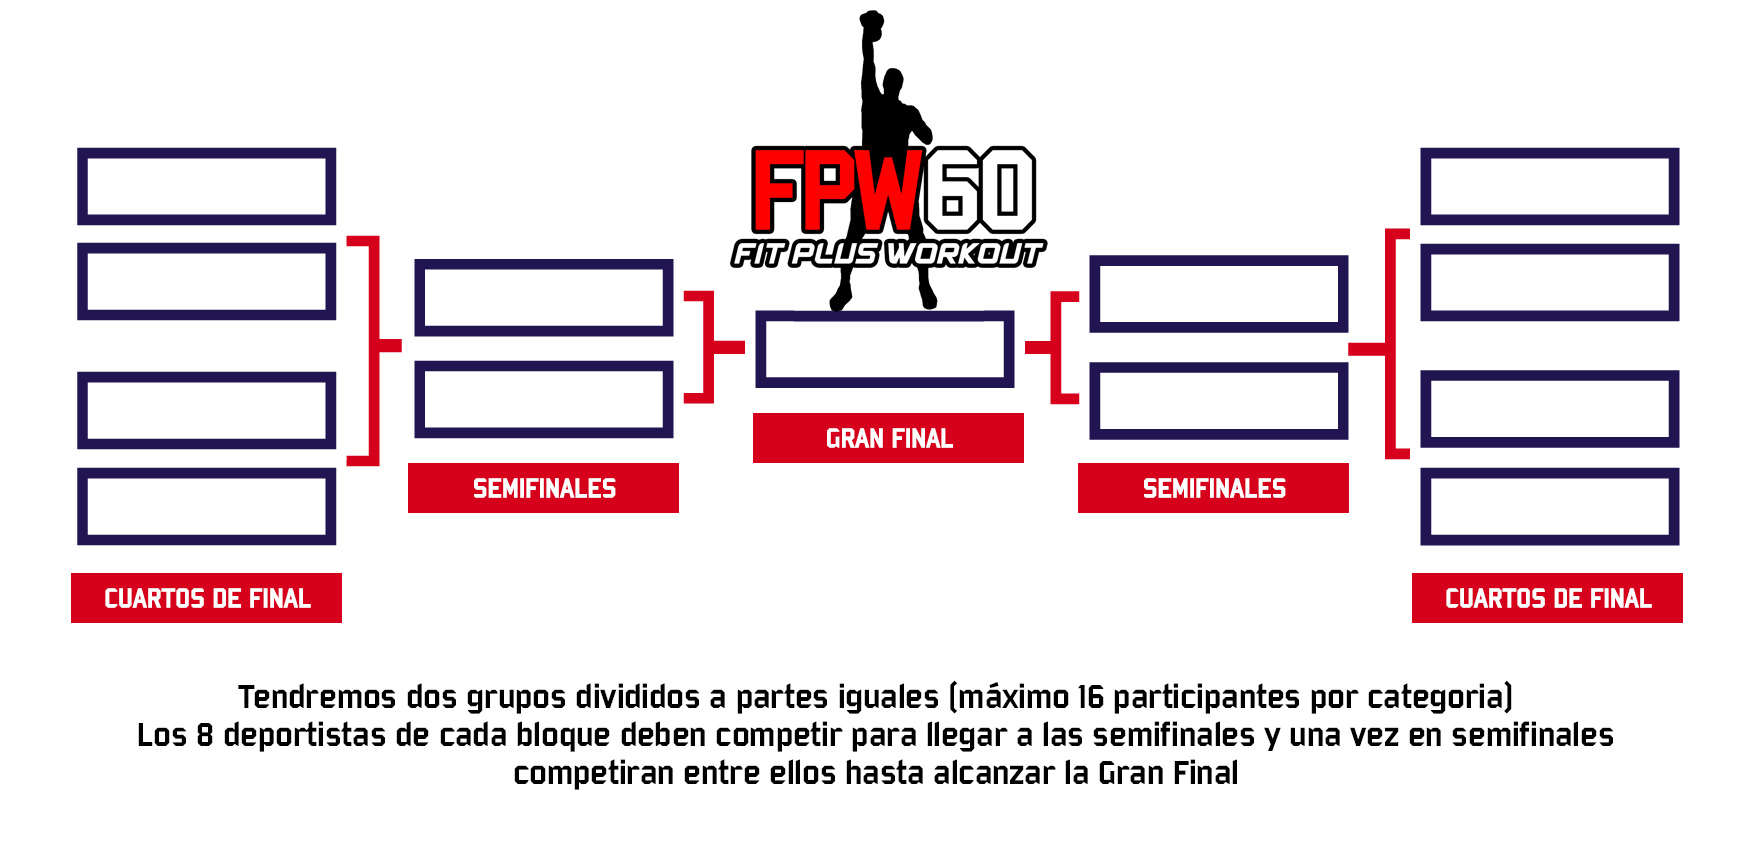 Esquema-Competicion-Functional-Challenge-FPW60